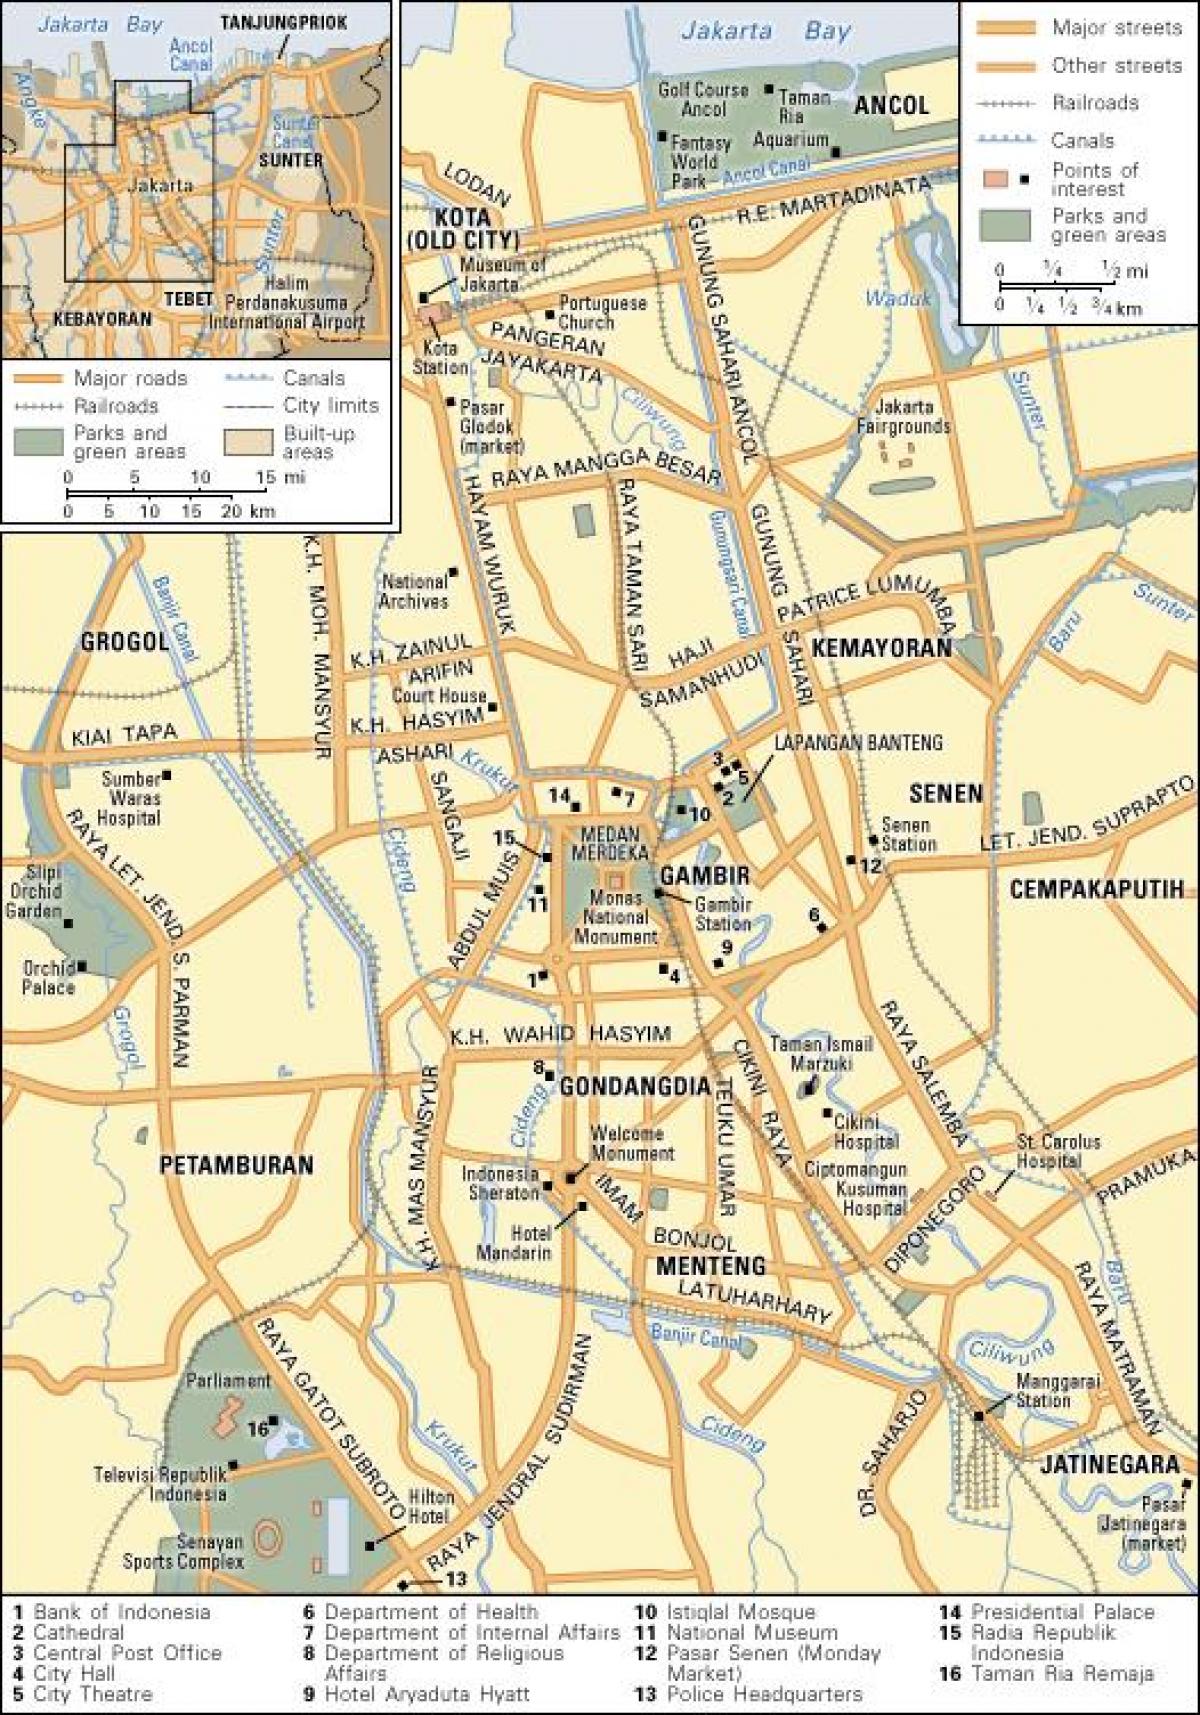 Mappa dei tour a piedi di Jakarta